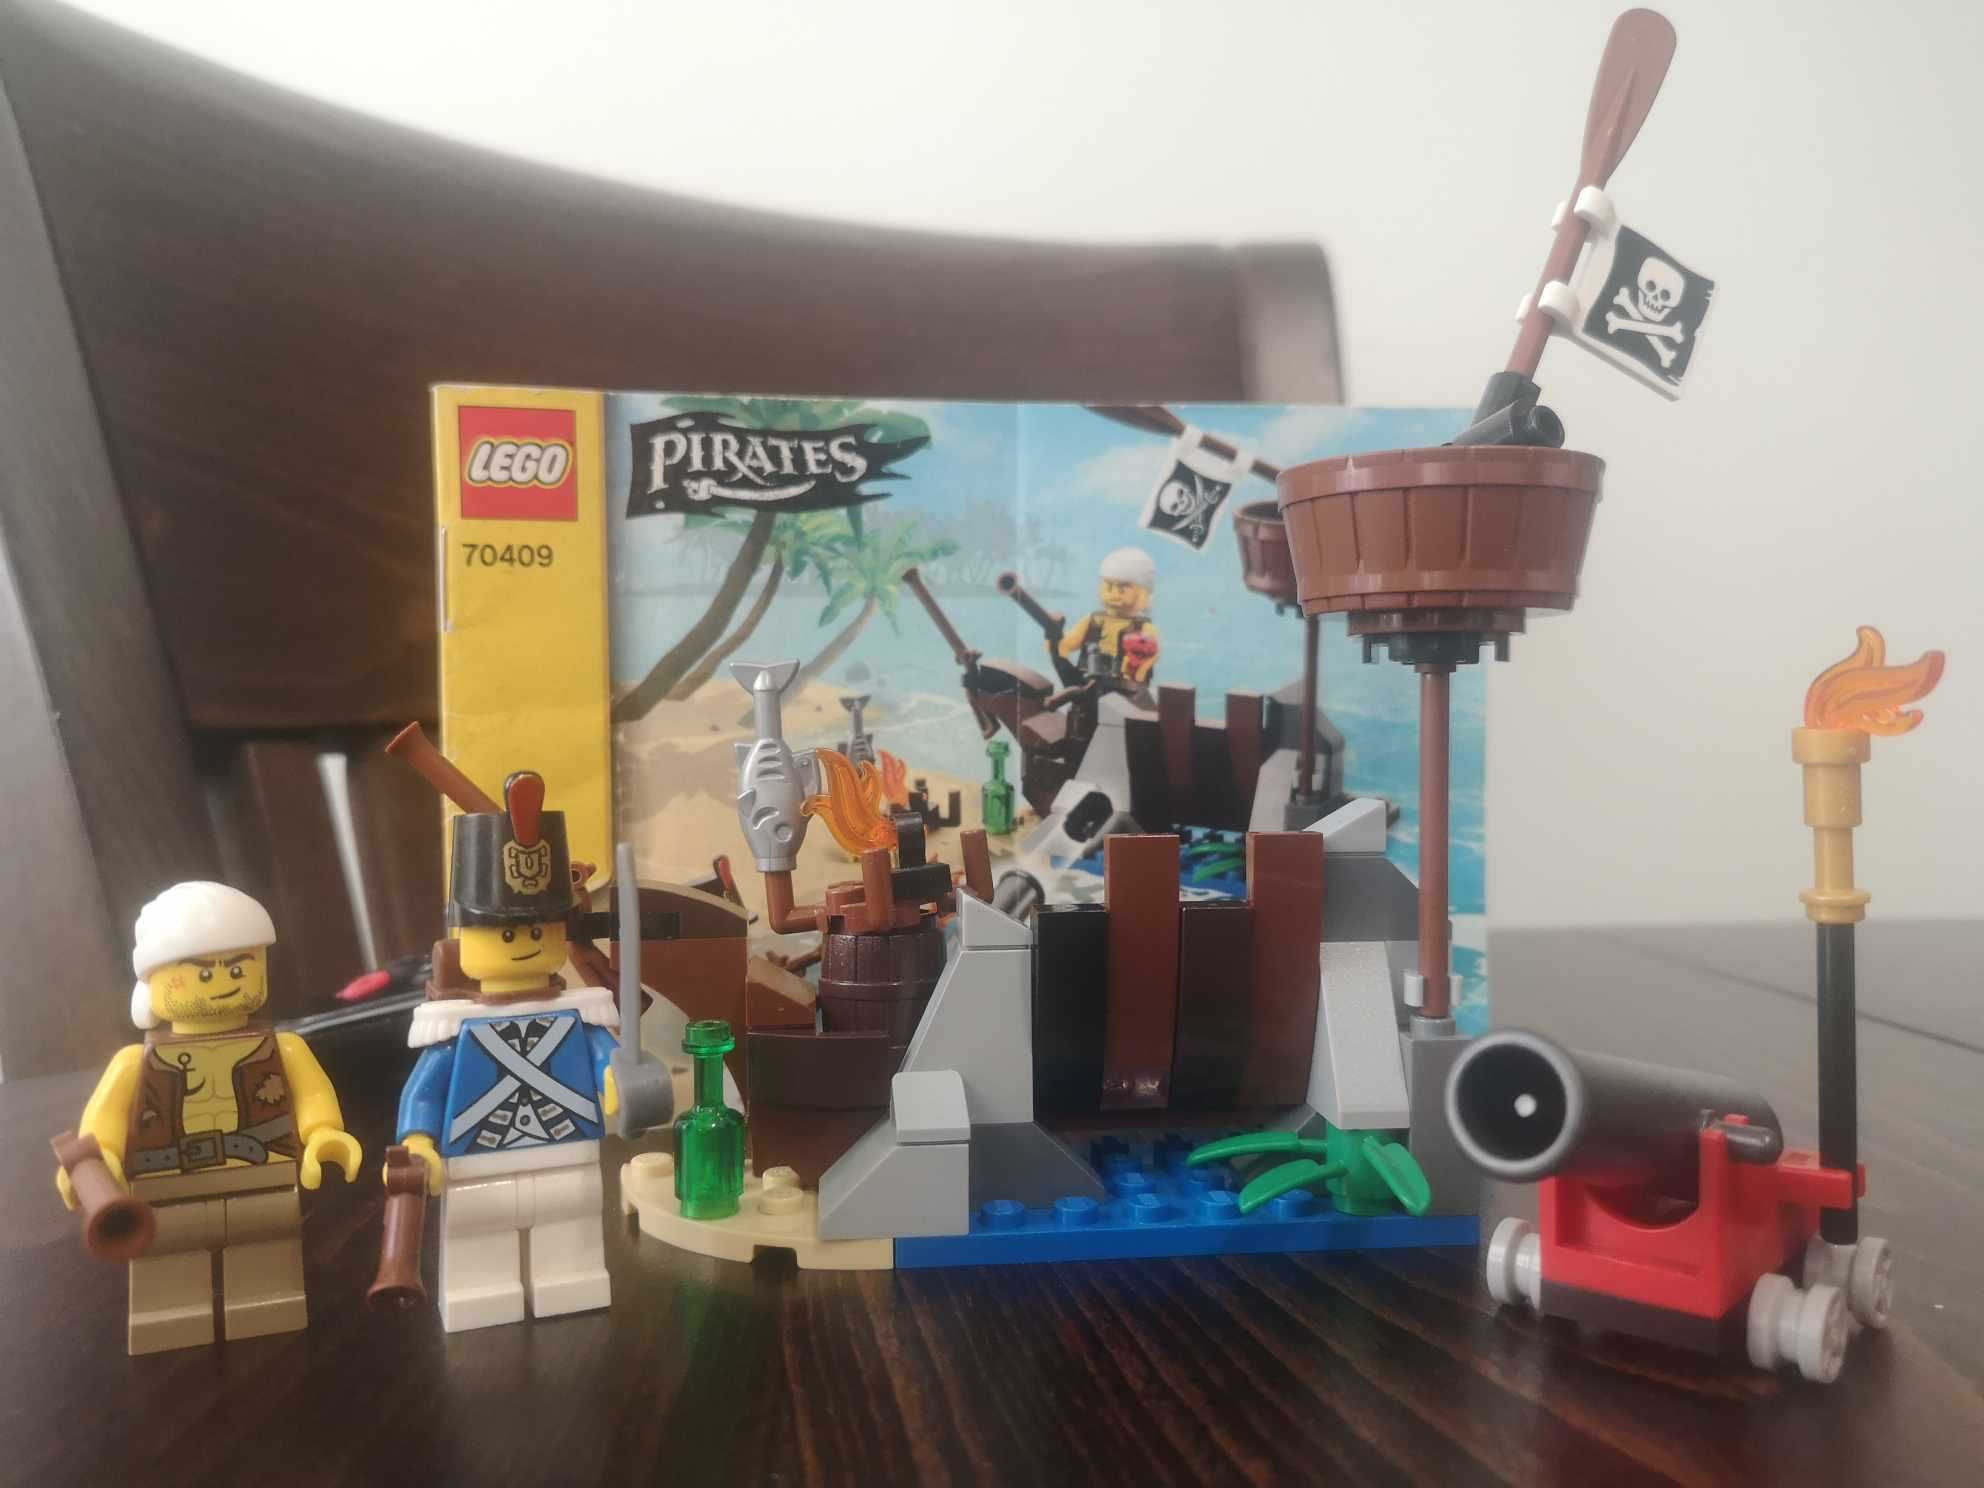 Употребявано LEGO Pirates Shipwreck Defense 70409